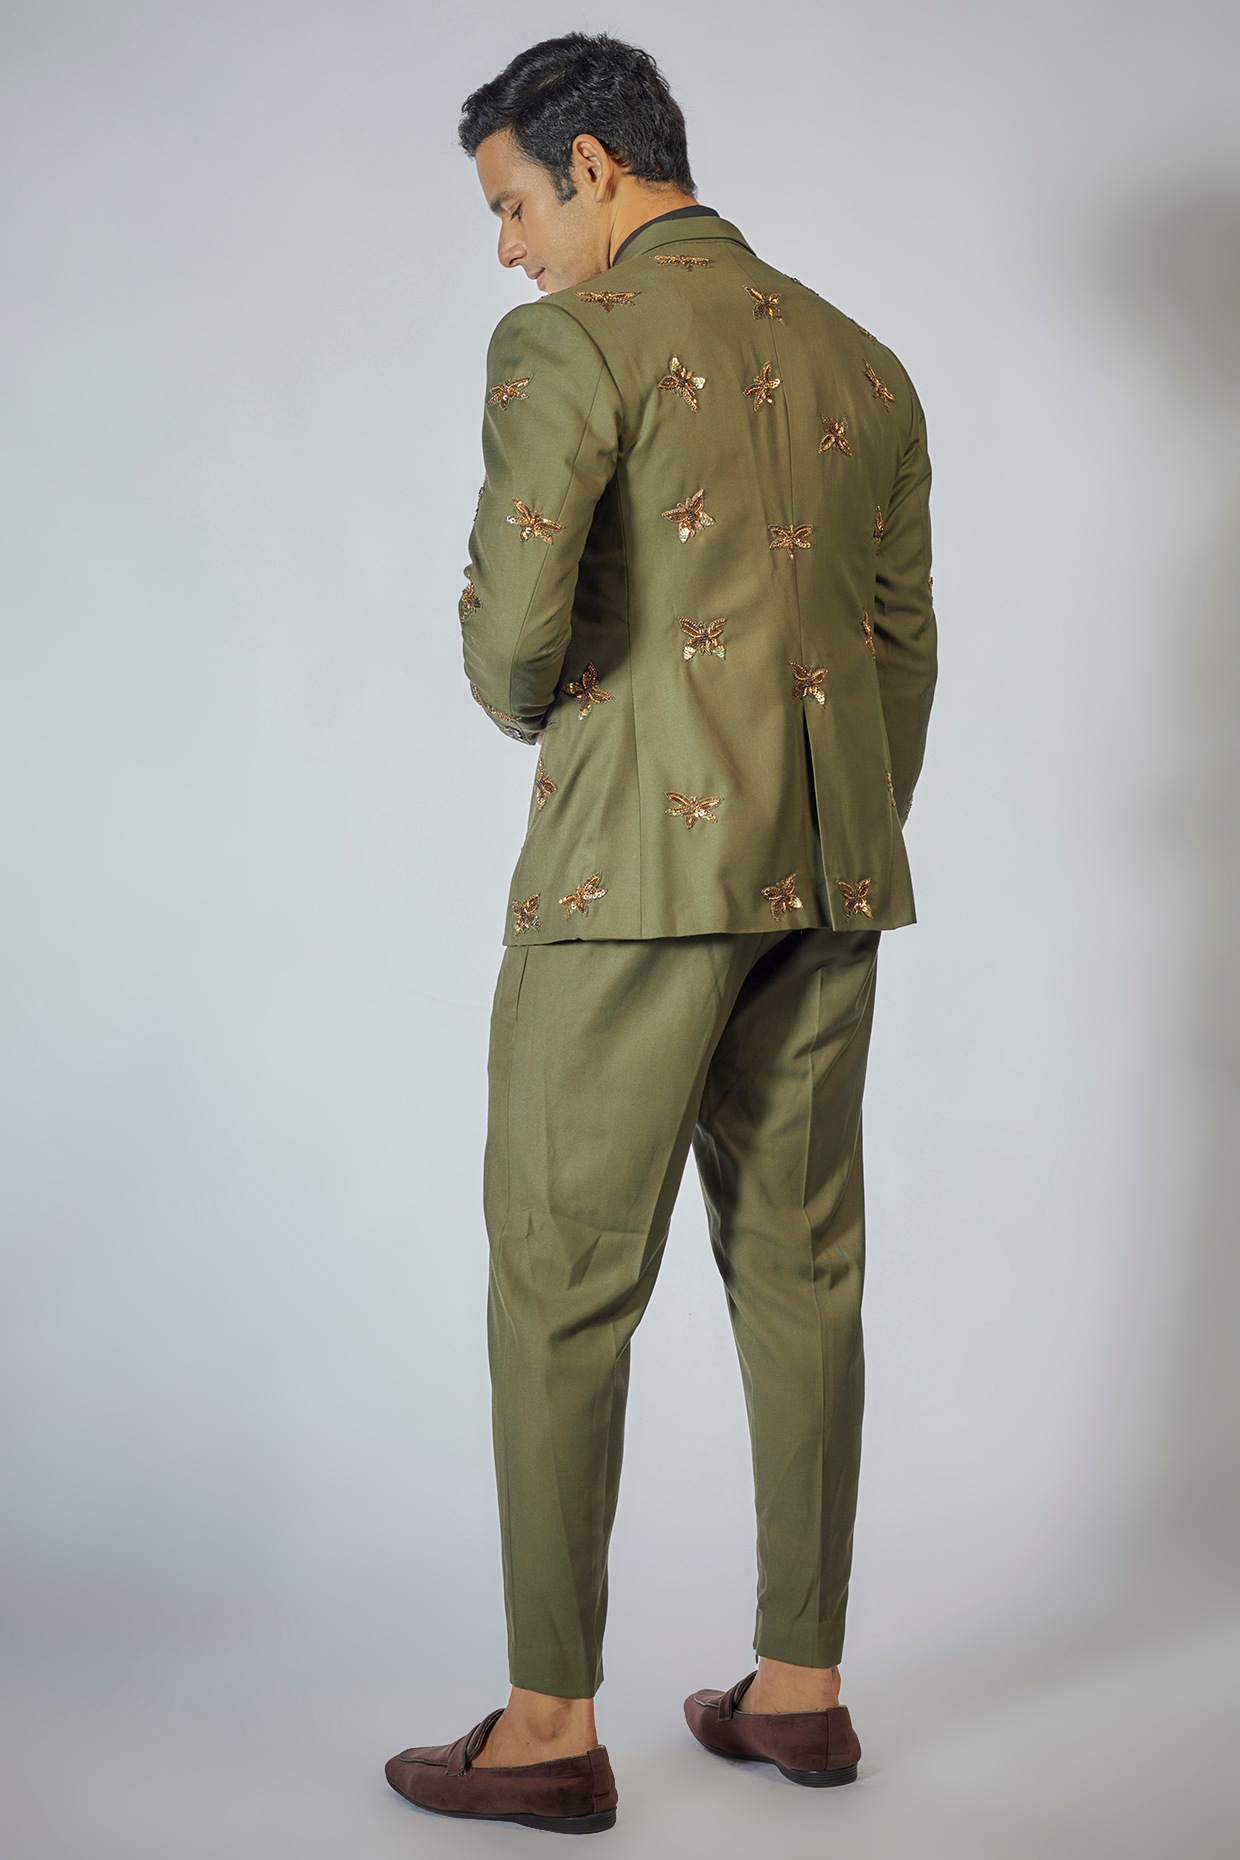 New Arrivals - Men's Custom Suits | INDOCHINO